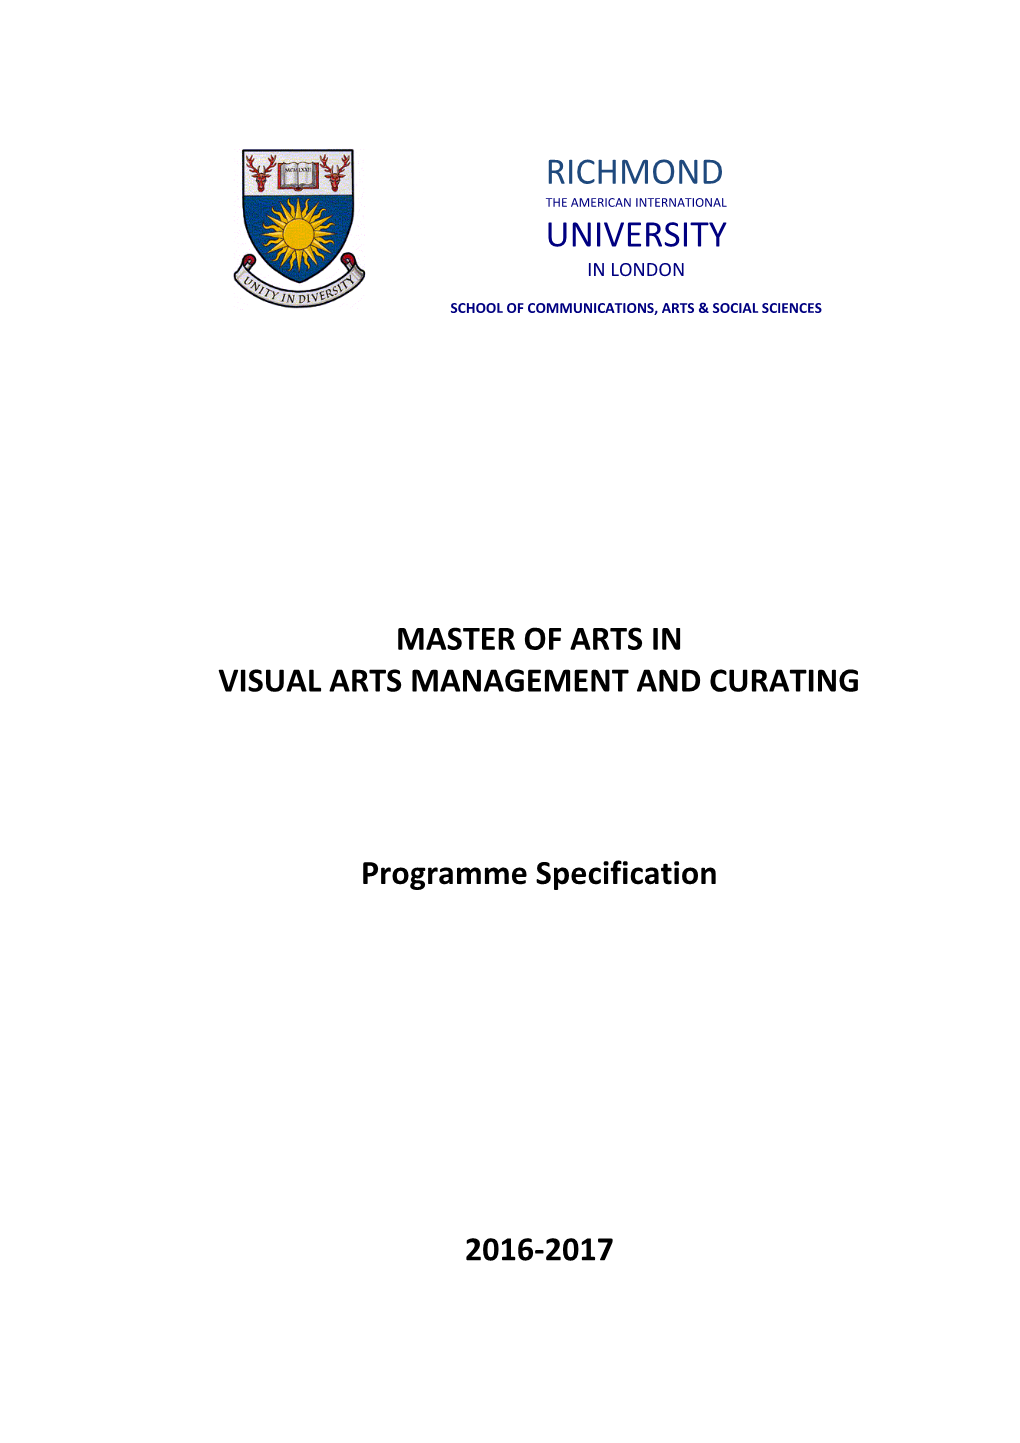 Visual Arts Management and Curating